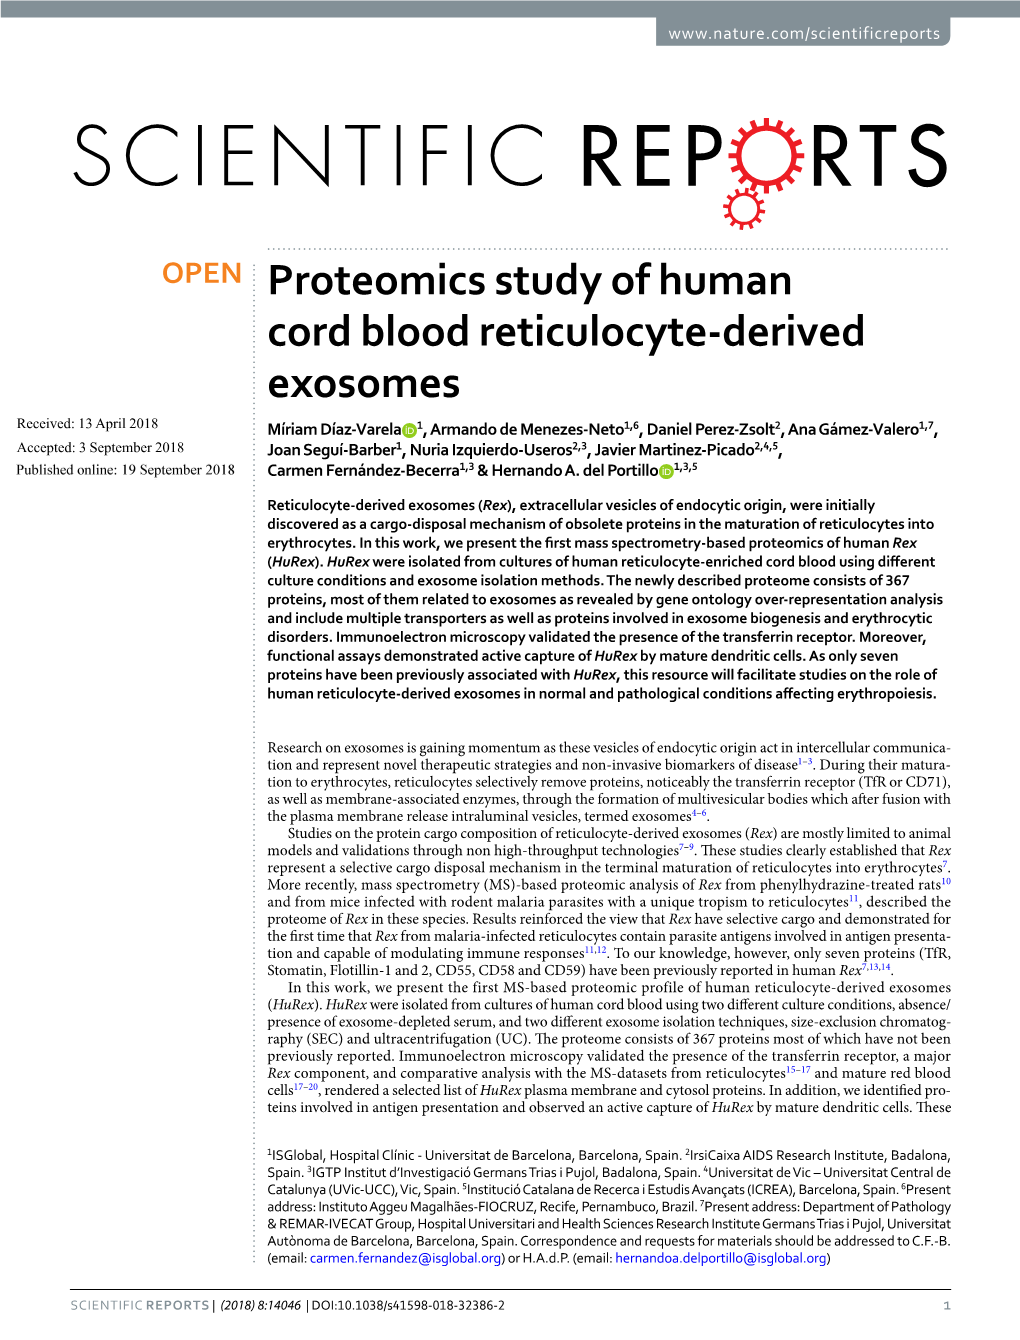 Proteomics Study of Human Cord Blood Reticulocyte